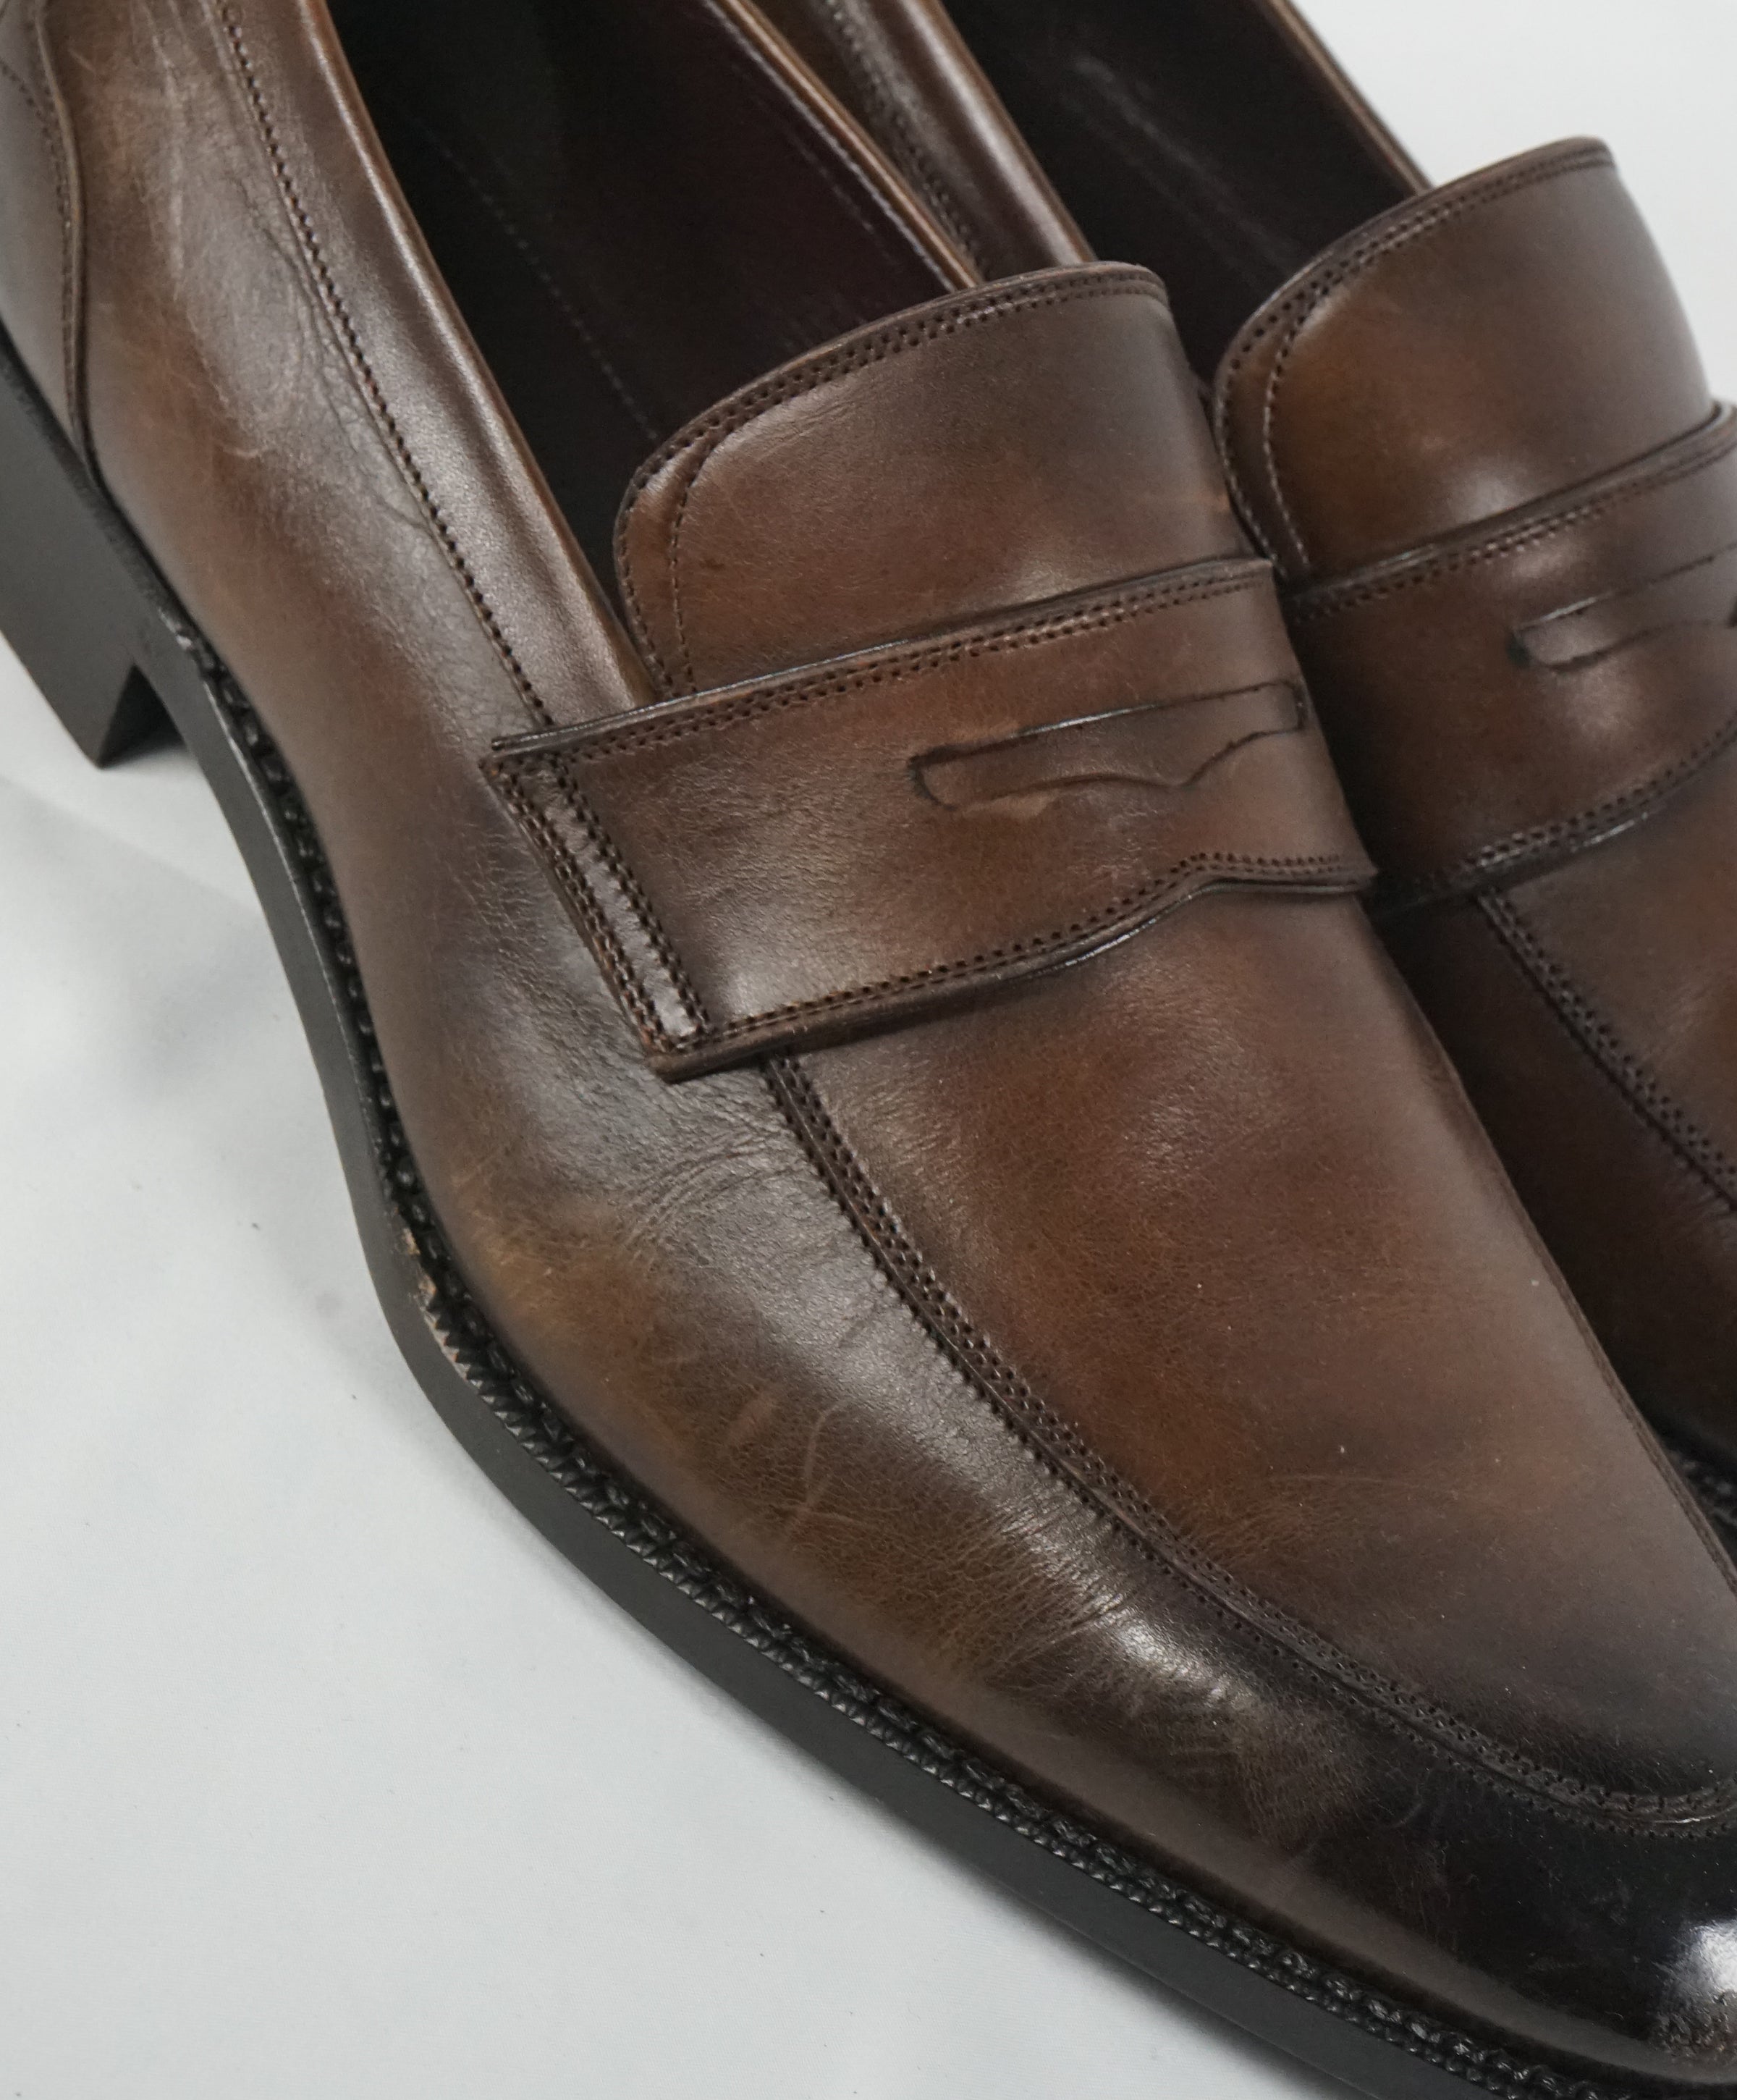 Ermenegildo Zegna NWB Penny Loafer Dress Shoes Size 11 12 US In Dark Brown